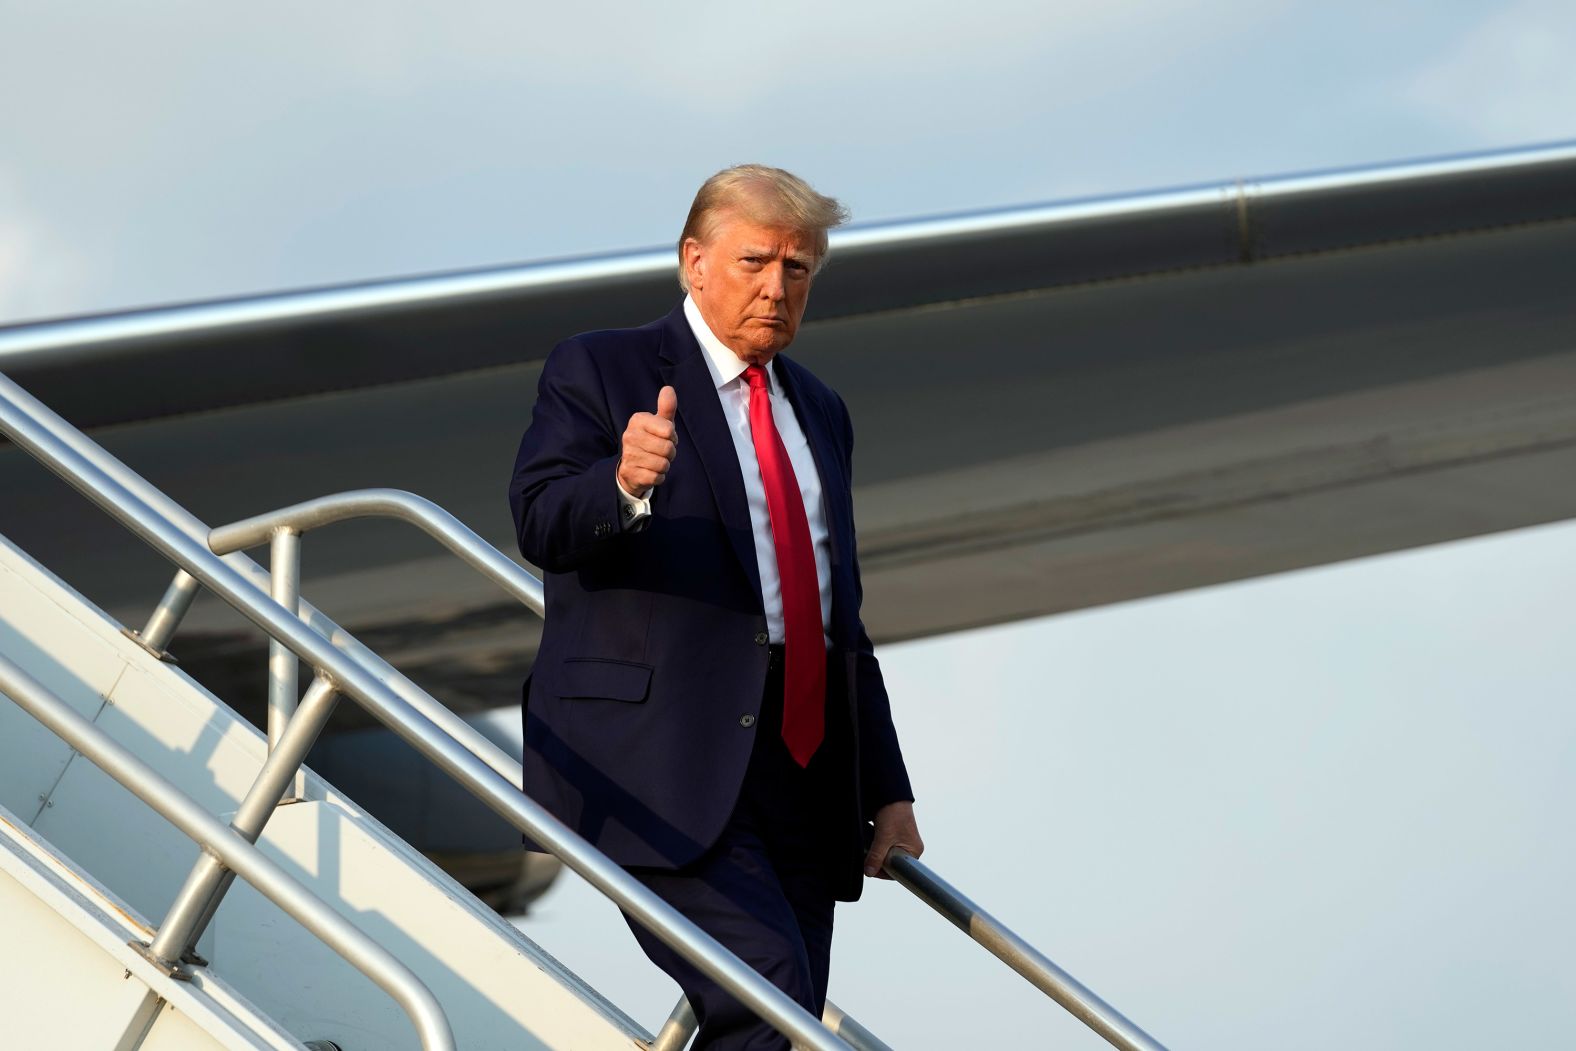 Trump lands at the Atlanta airport on Thursday.